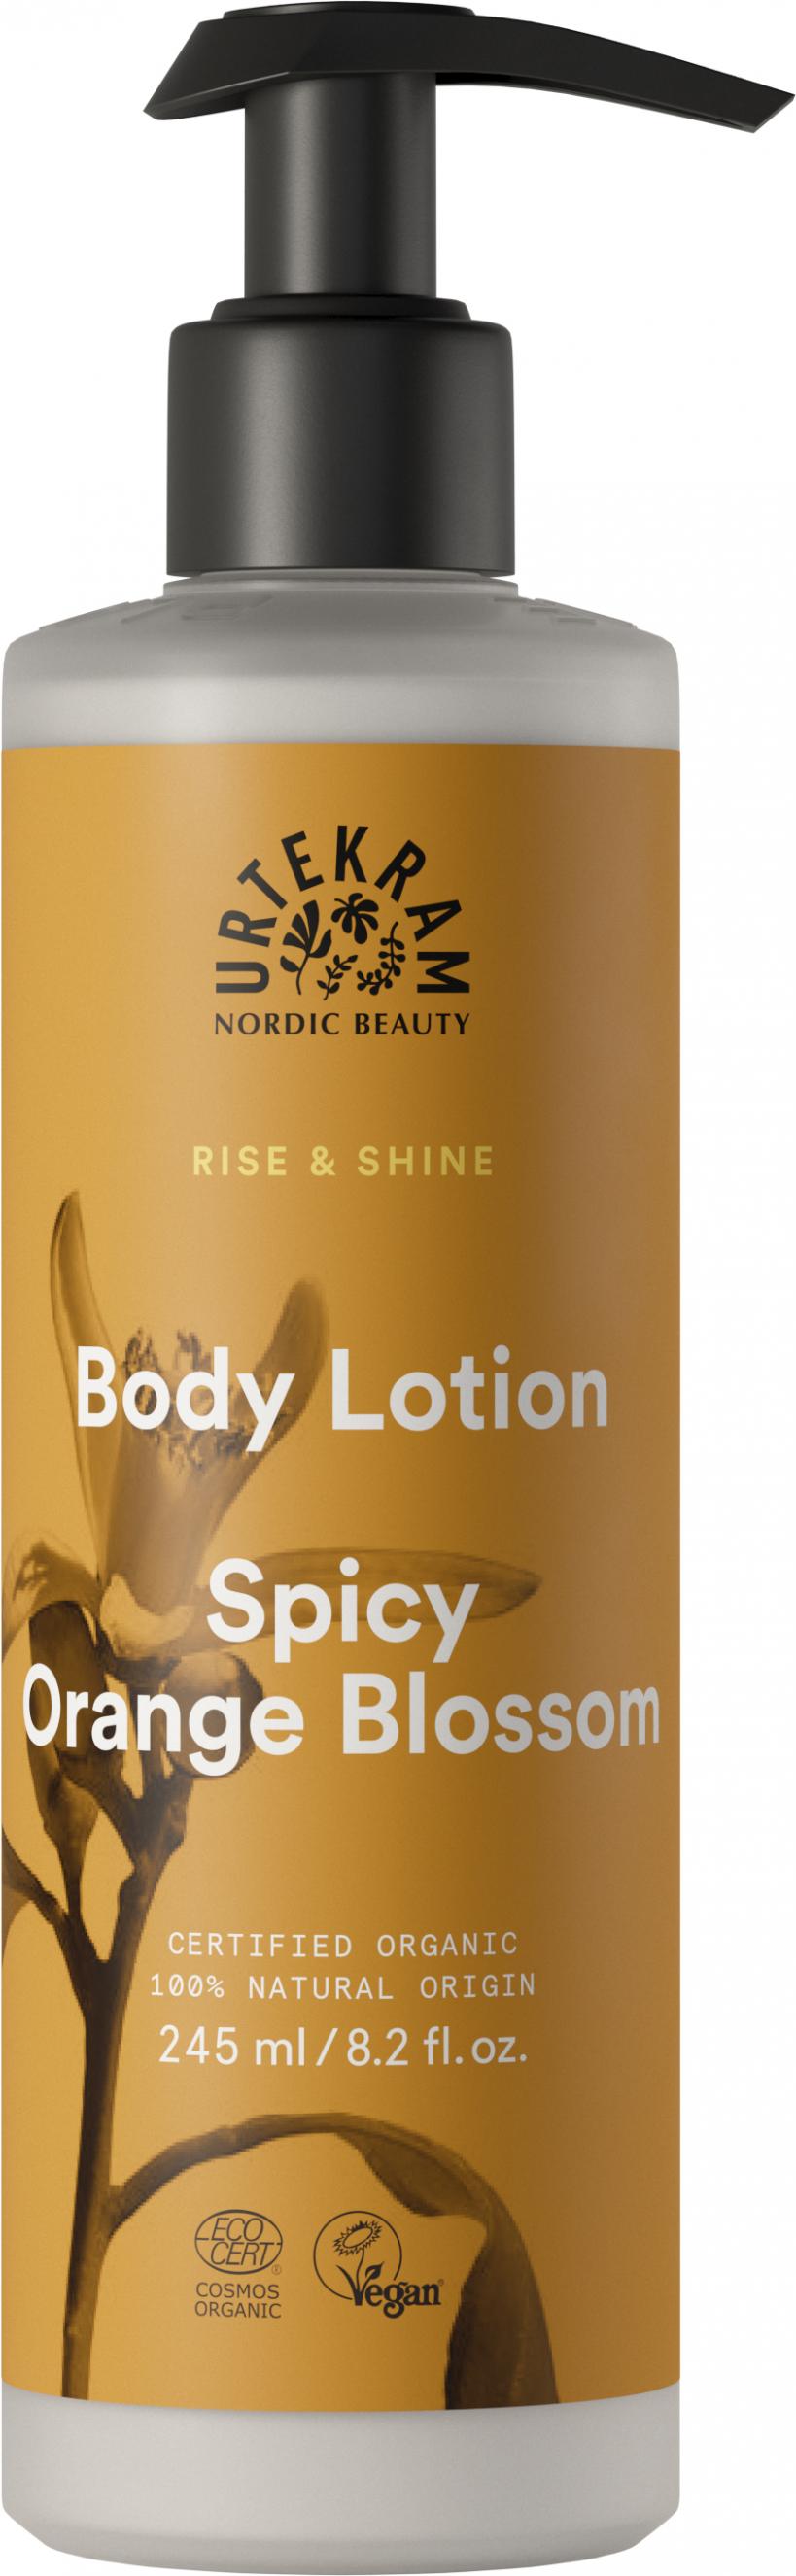 Body Lotion Spicy Orange Blossom 245ml